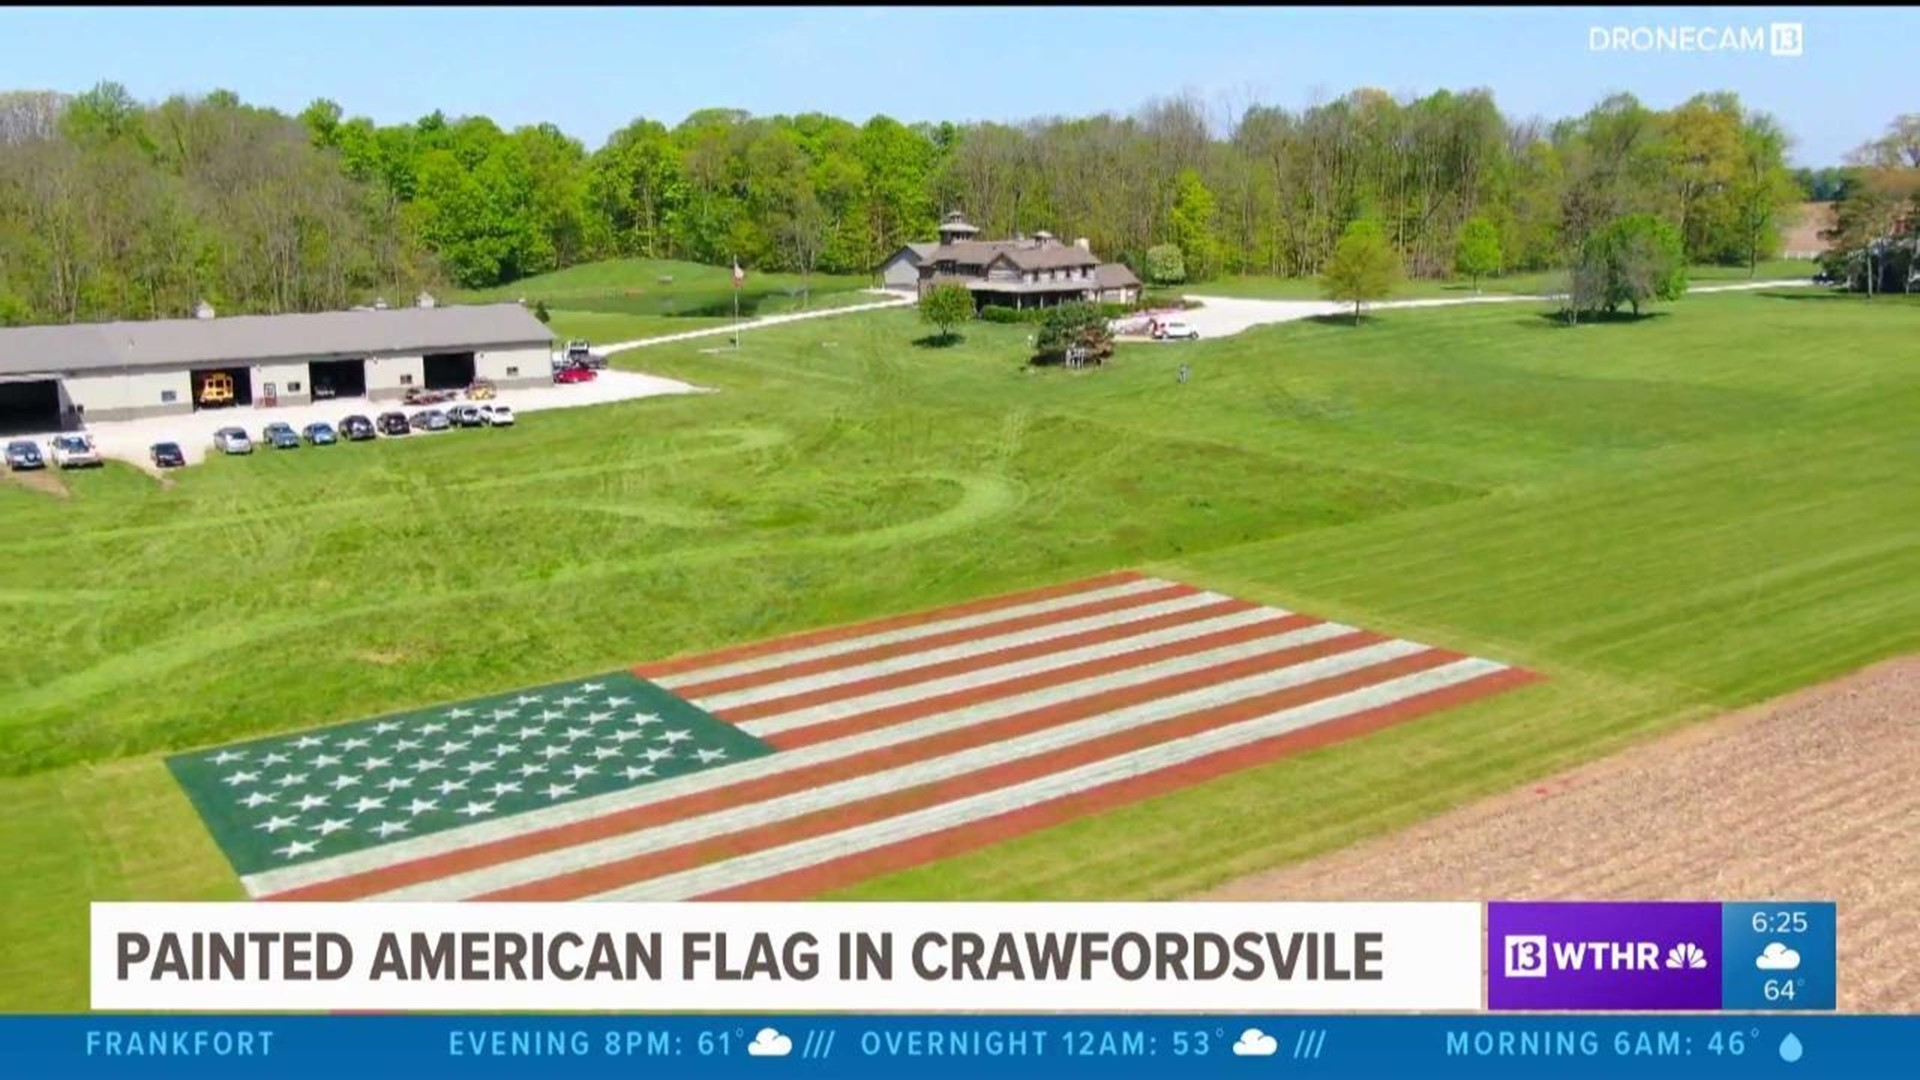 Painted American flag in Crawfordsville